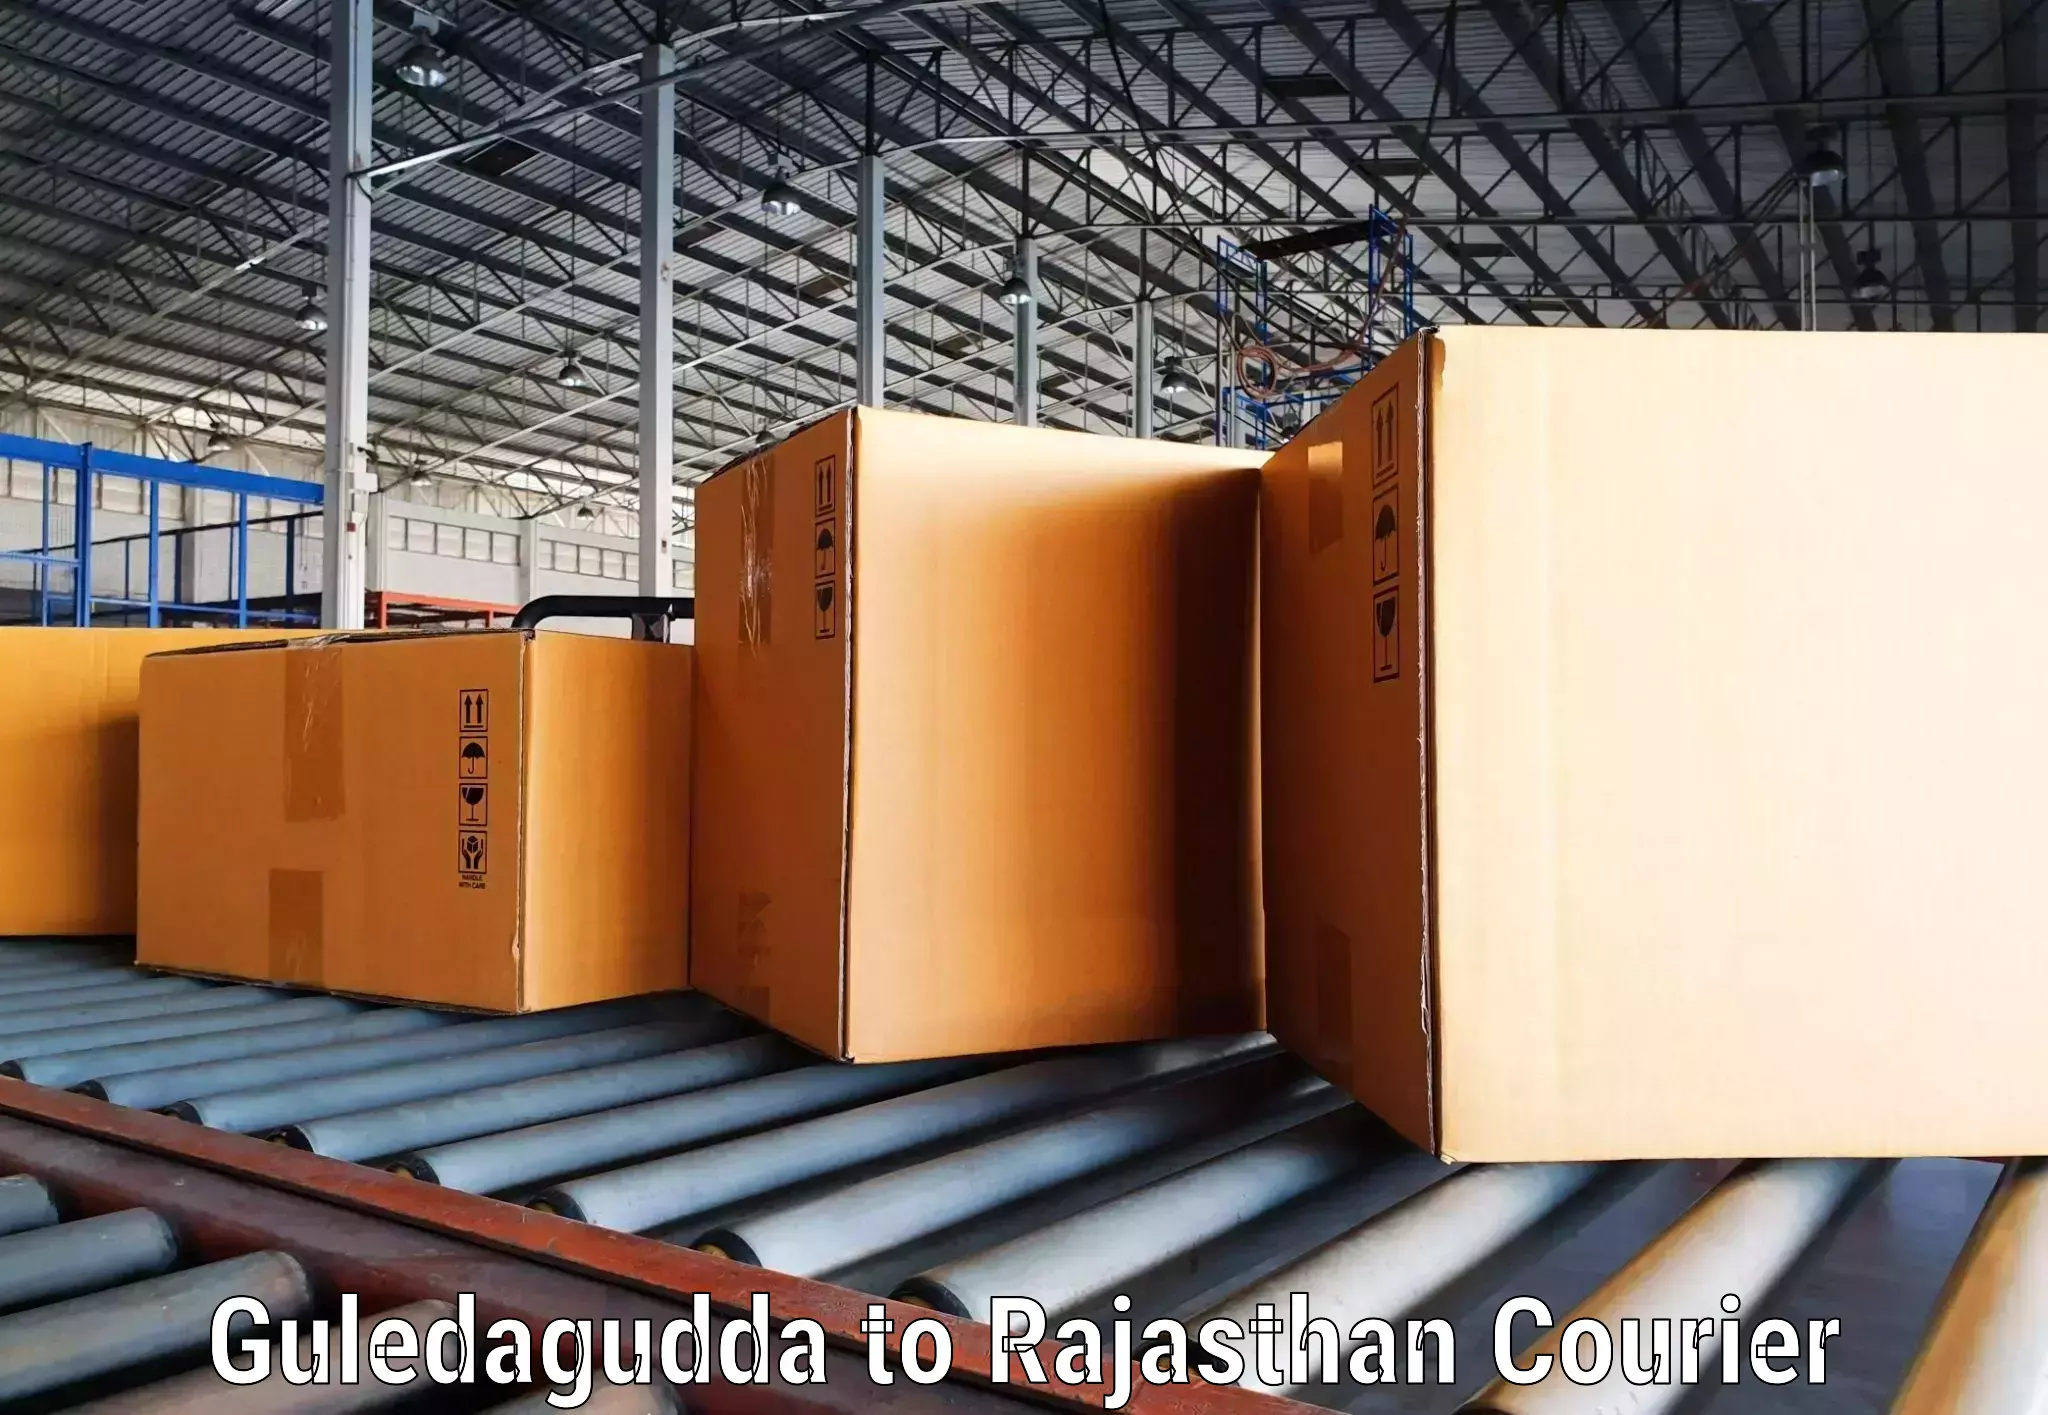 Courier service partnerships Guledagudda to Nasirabad